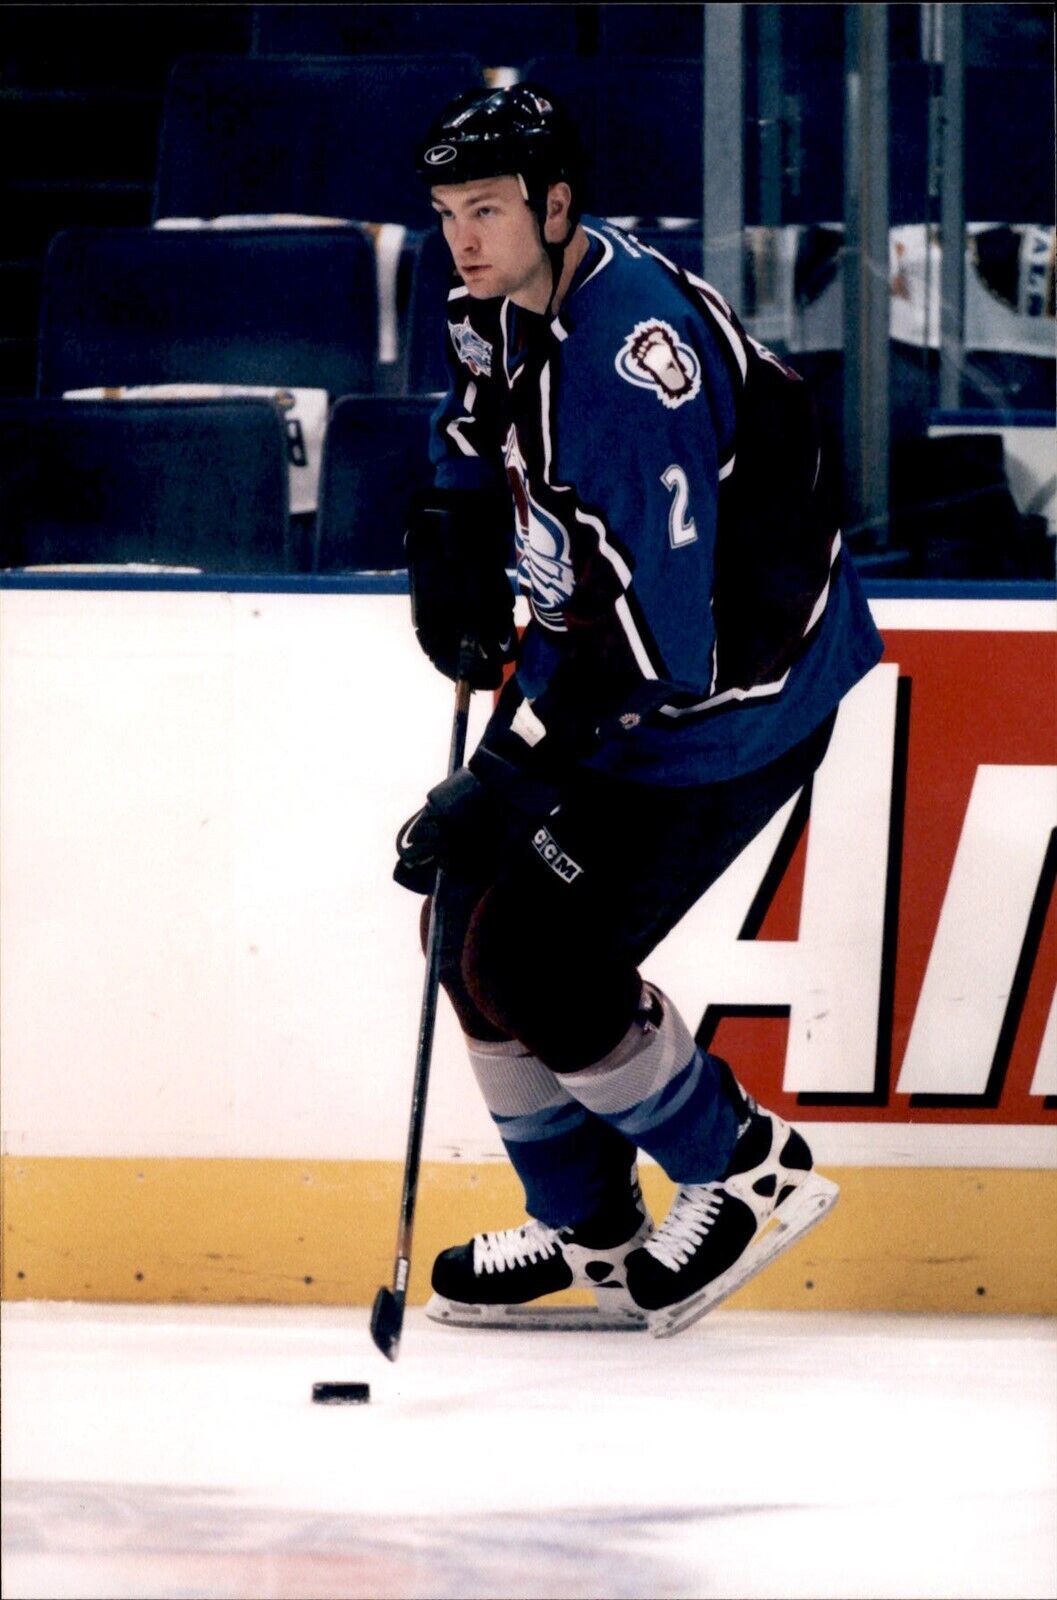 PF23 2001 Original Photo BRYAN MUIR COLORADO AVALANCHE DEFENSE NHL ICE HOCKEY